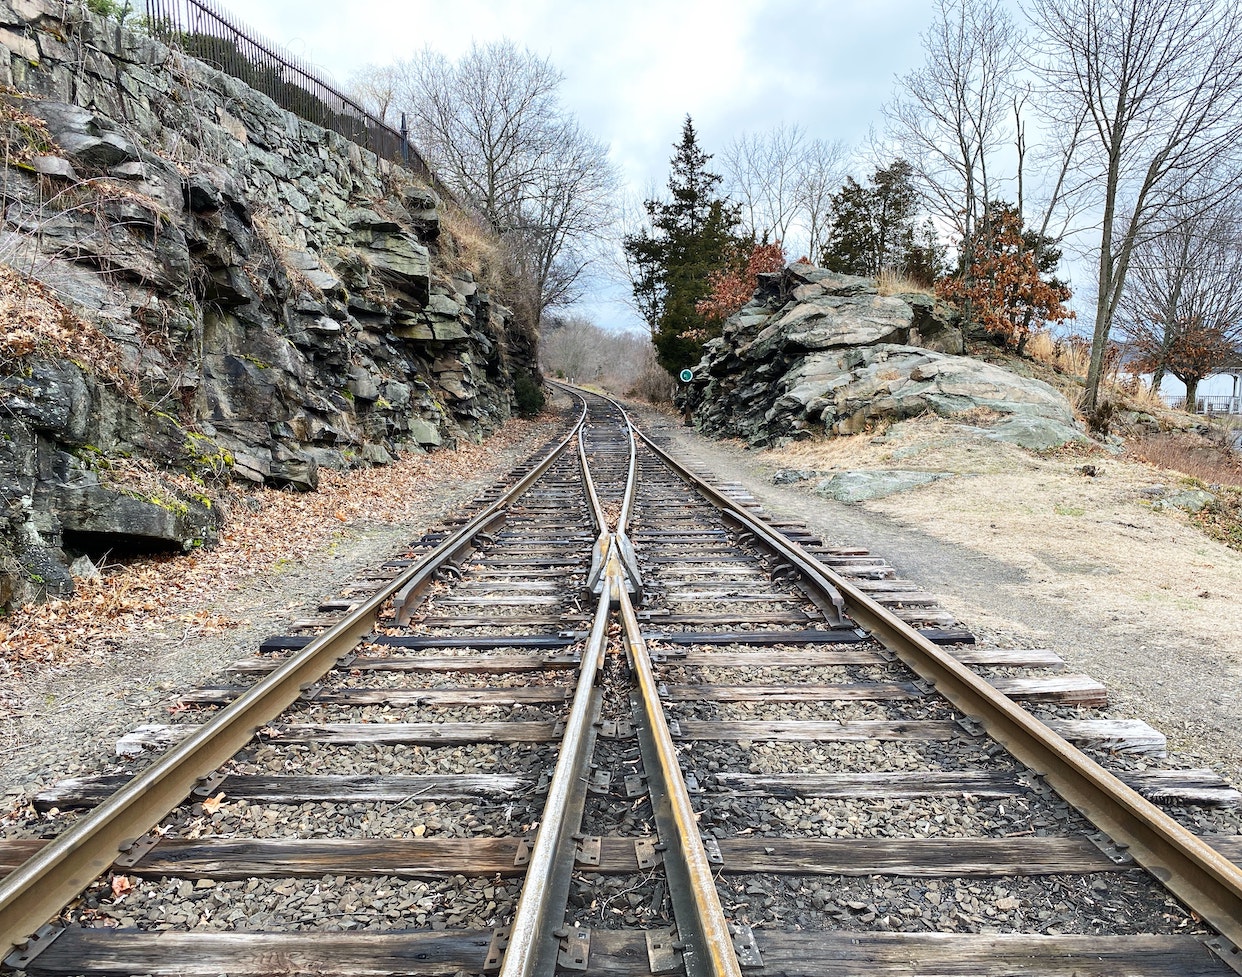 Train tracks merging